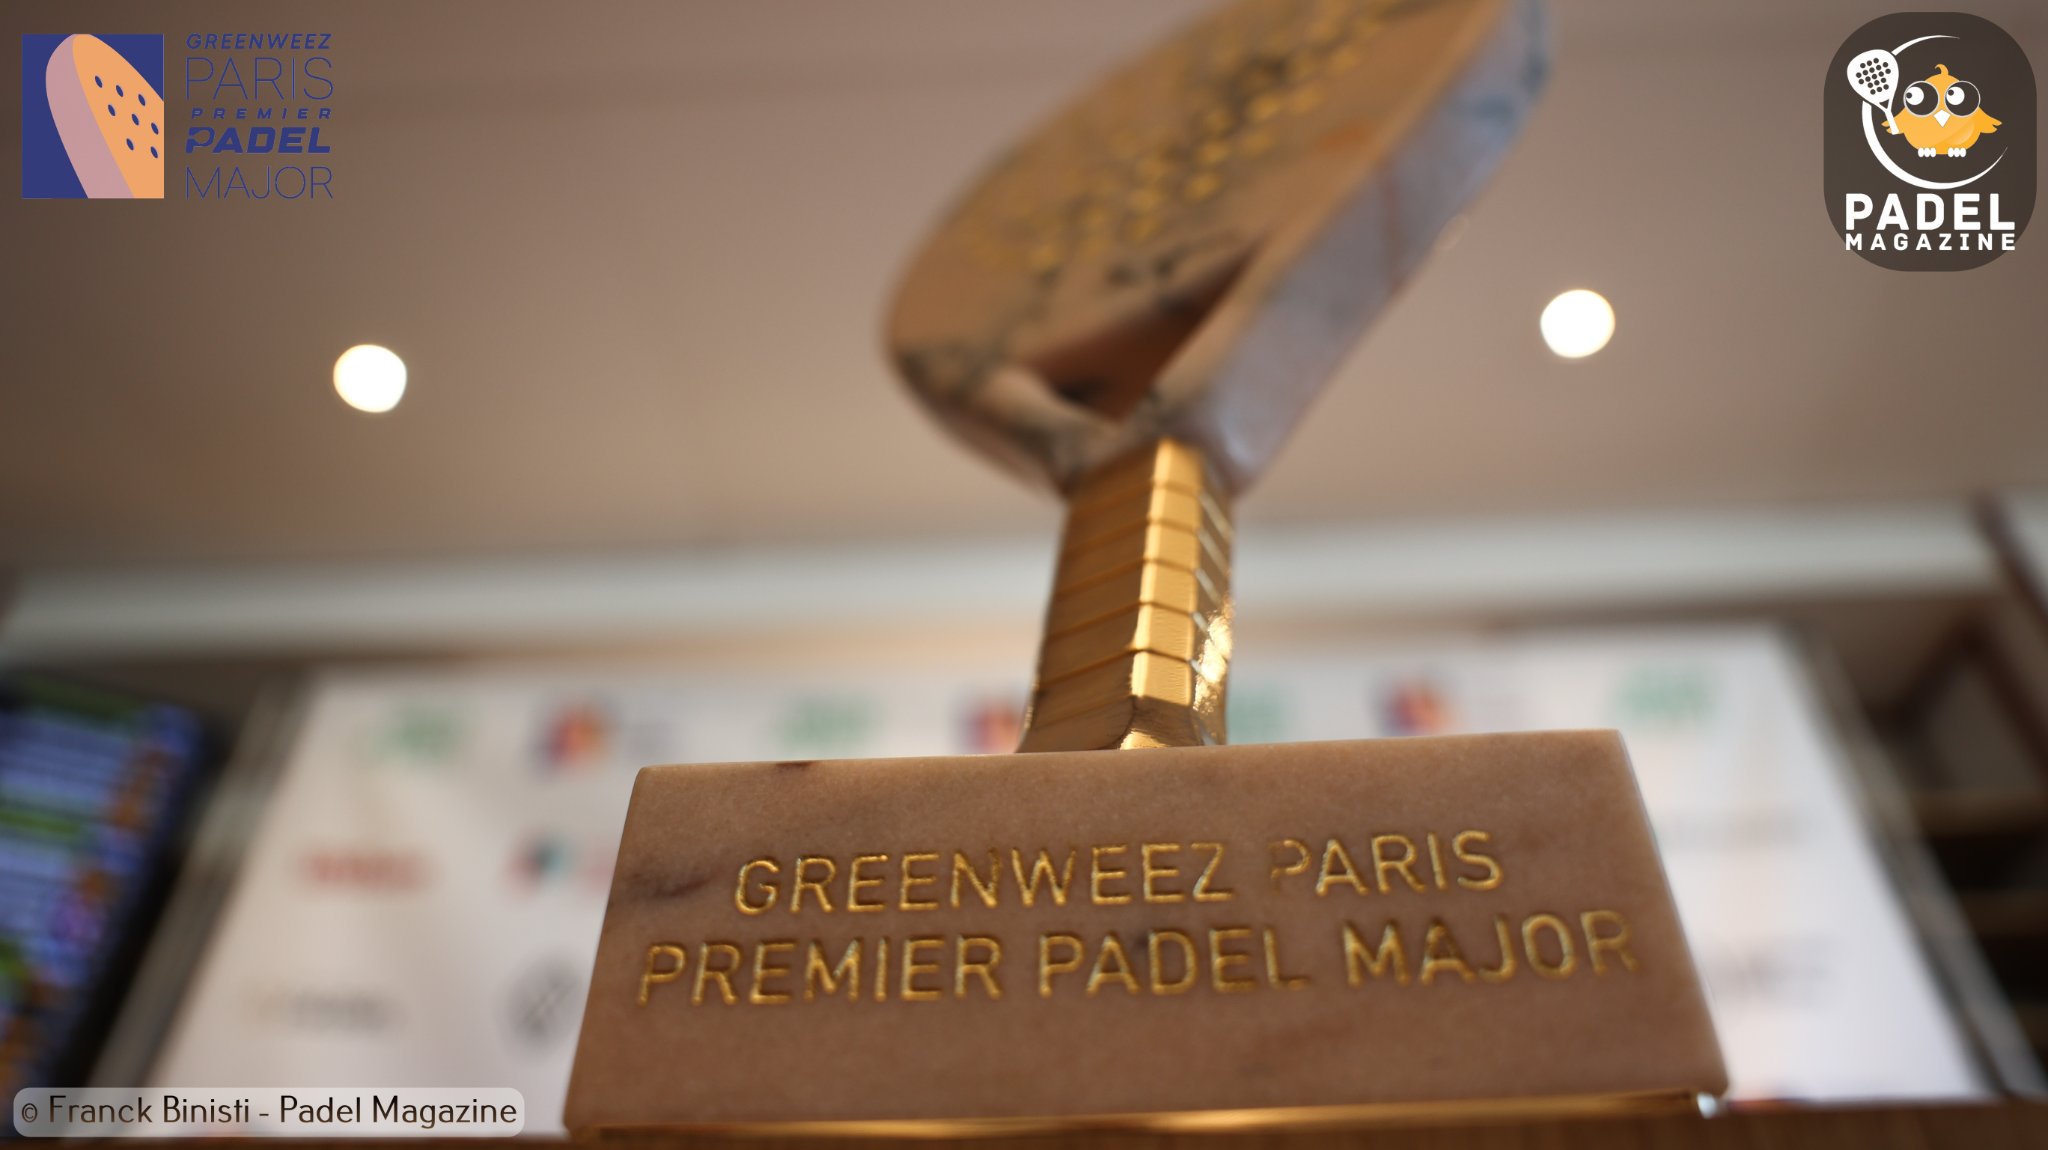 greenweez paris premier padel major 2022 Roland Garros Trophy